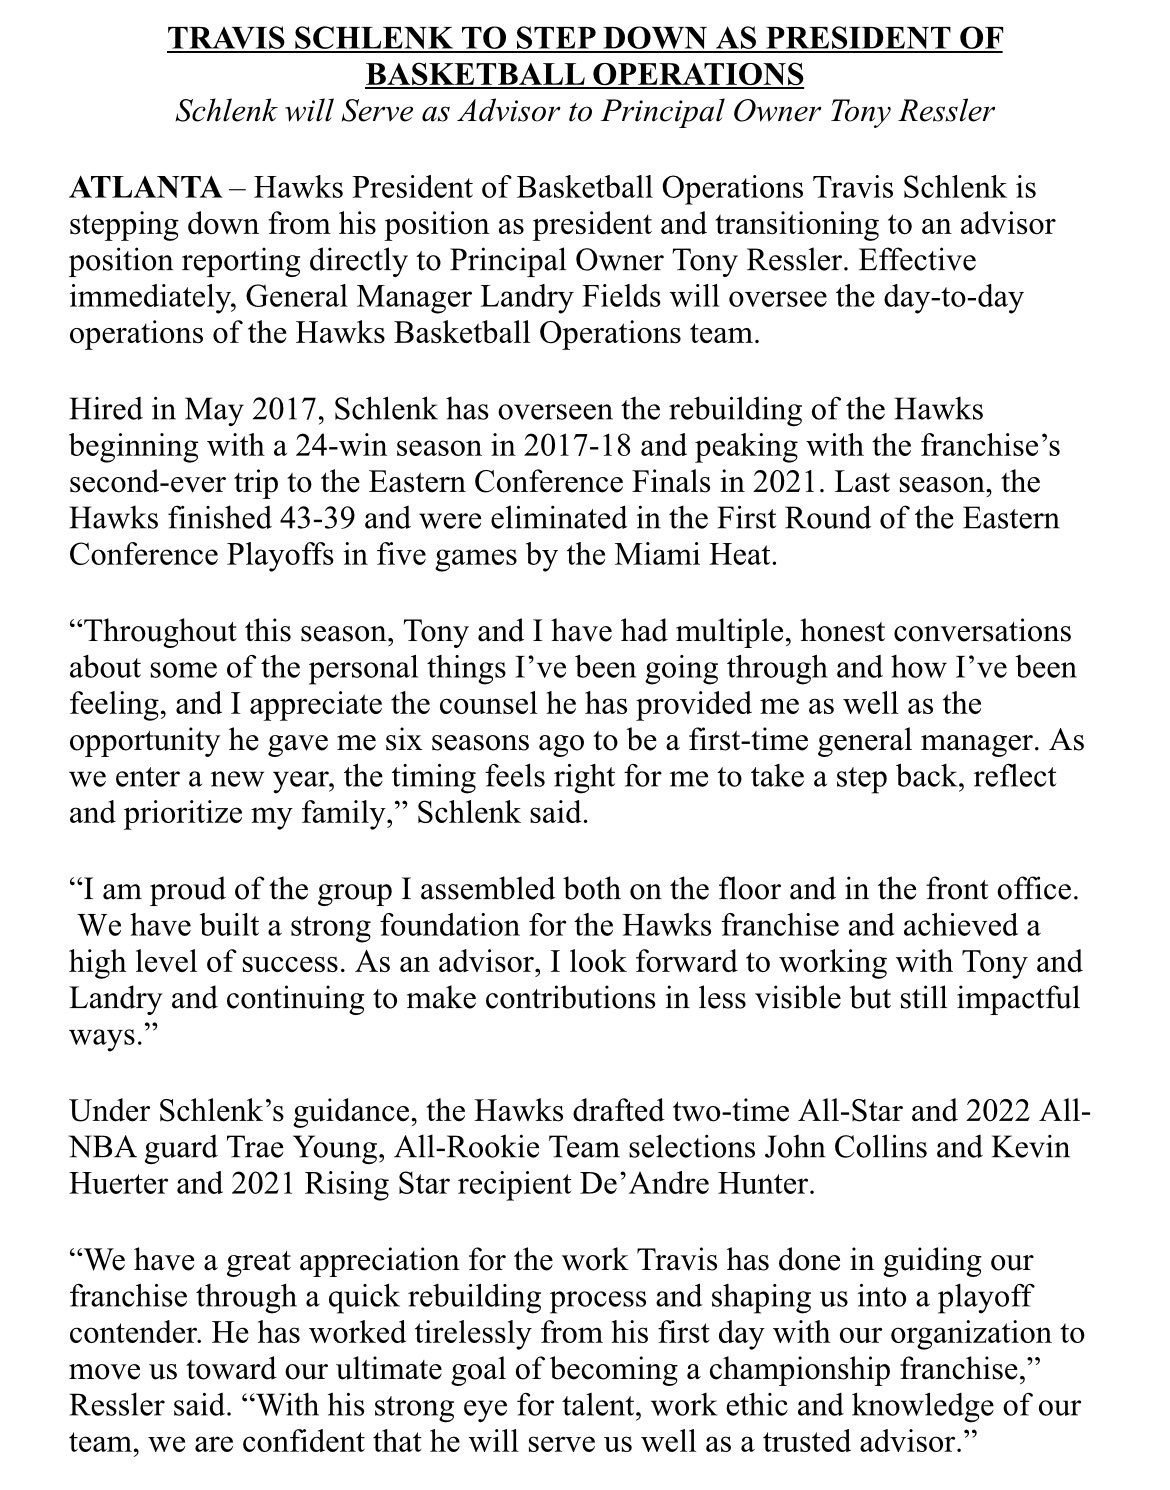 Hawks president Schlenk moving into advisory role